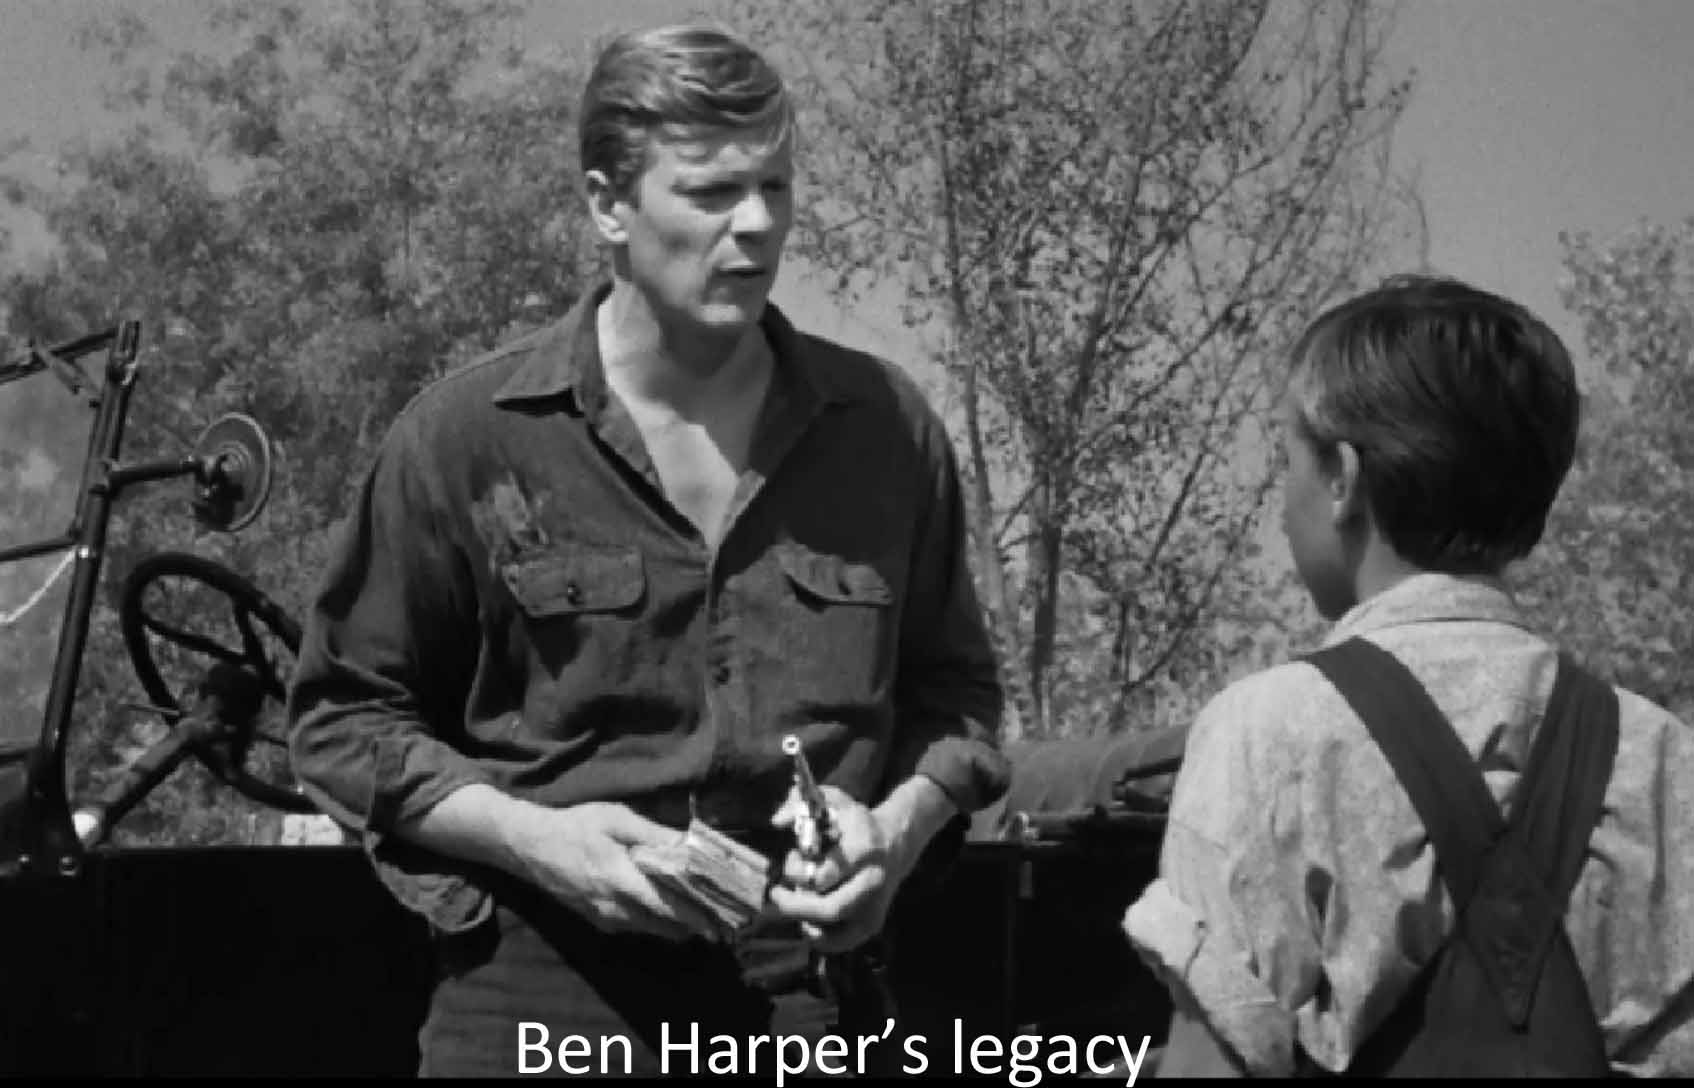 Ben Harper's legacy